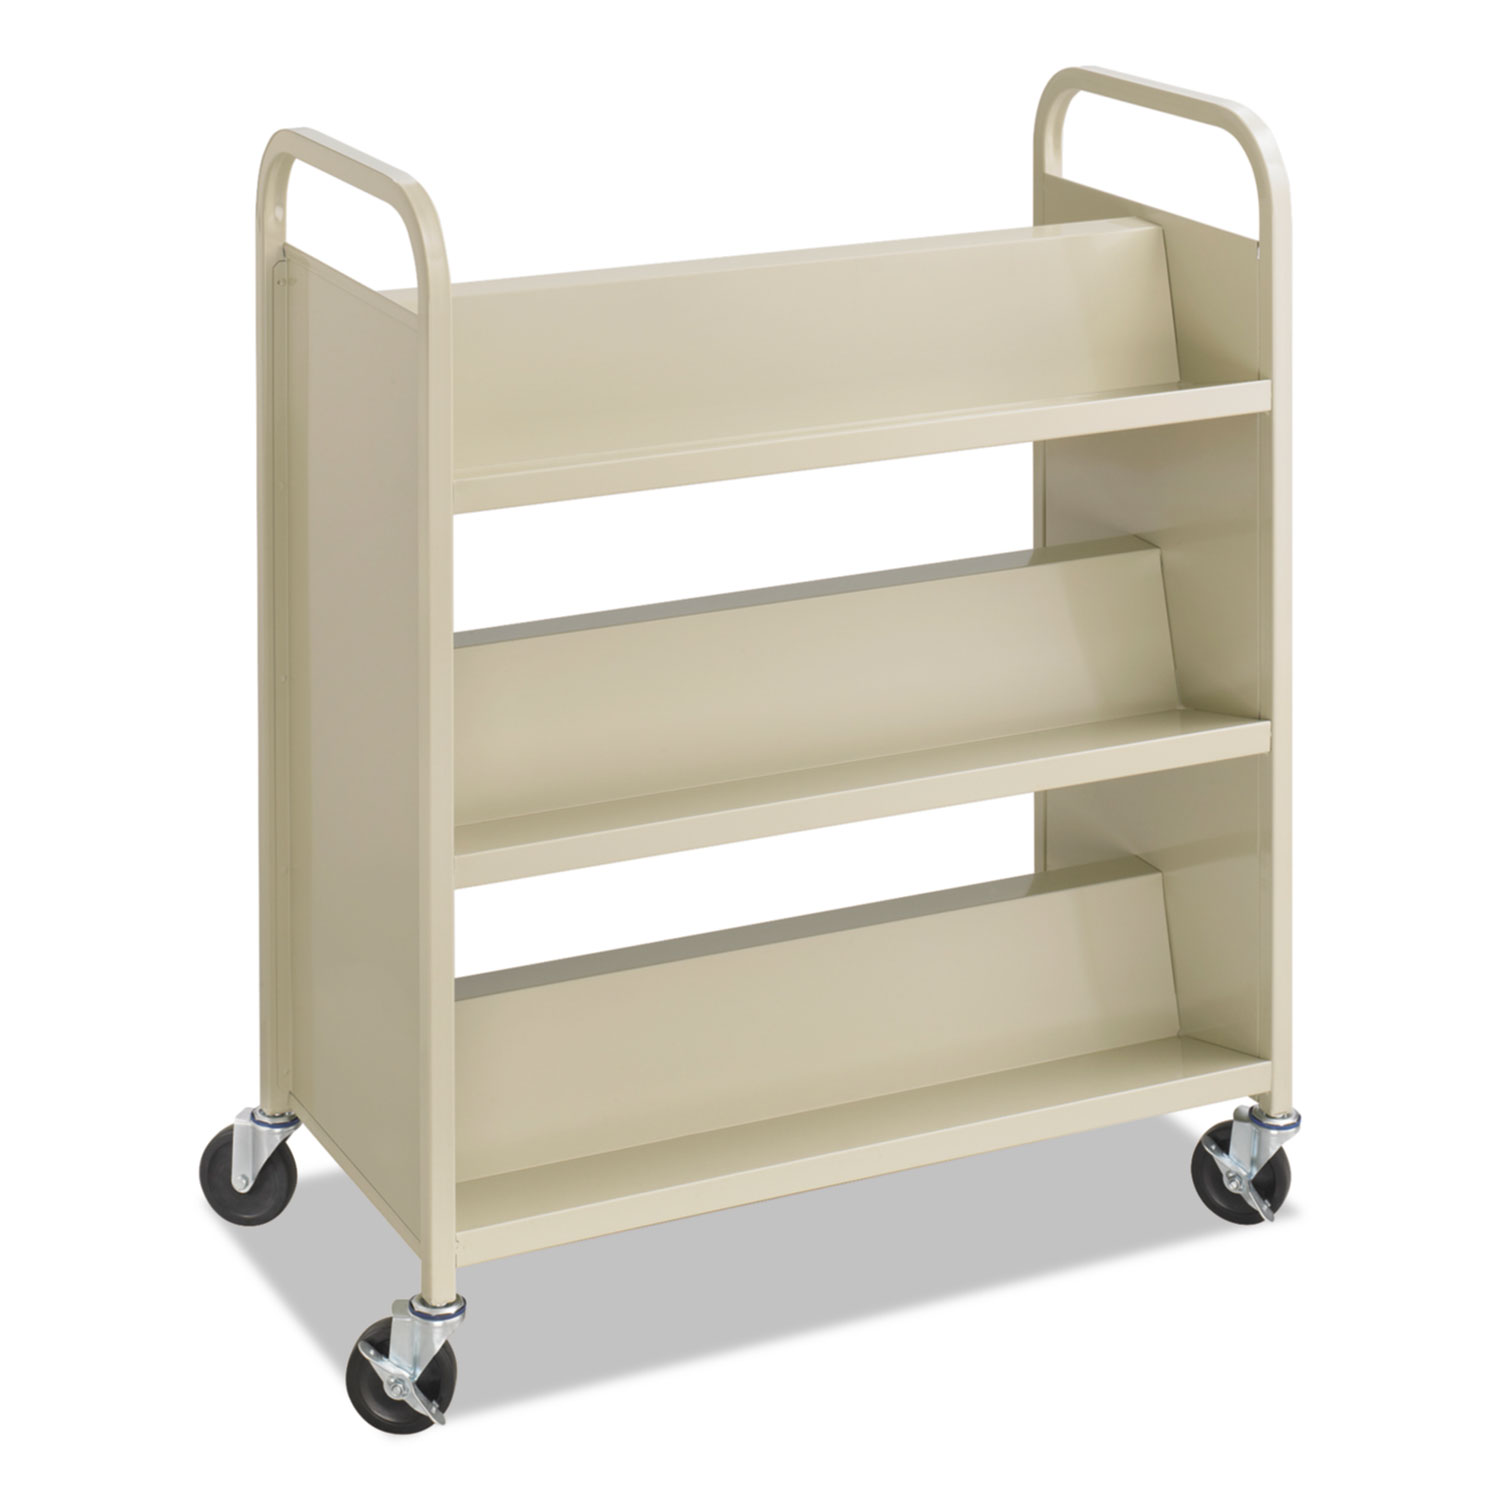 Steel Book Cart, Six-Shelf, 36w x 18-1/2d x 43-1/2h, Sand